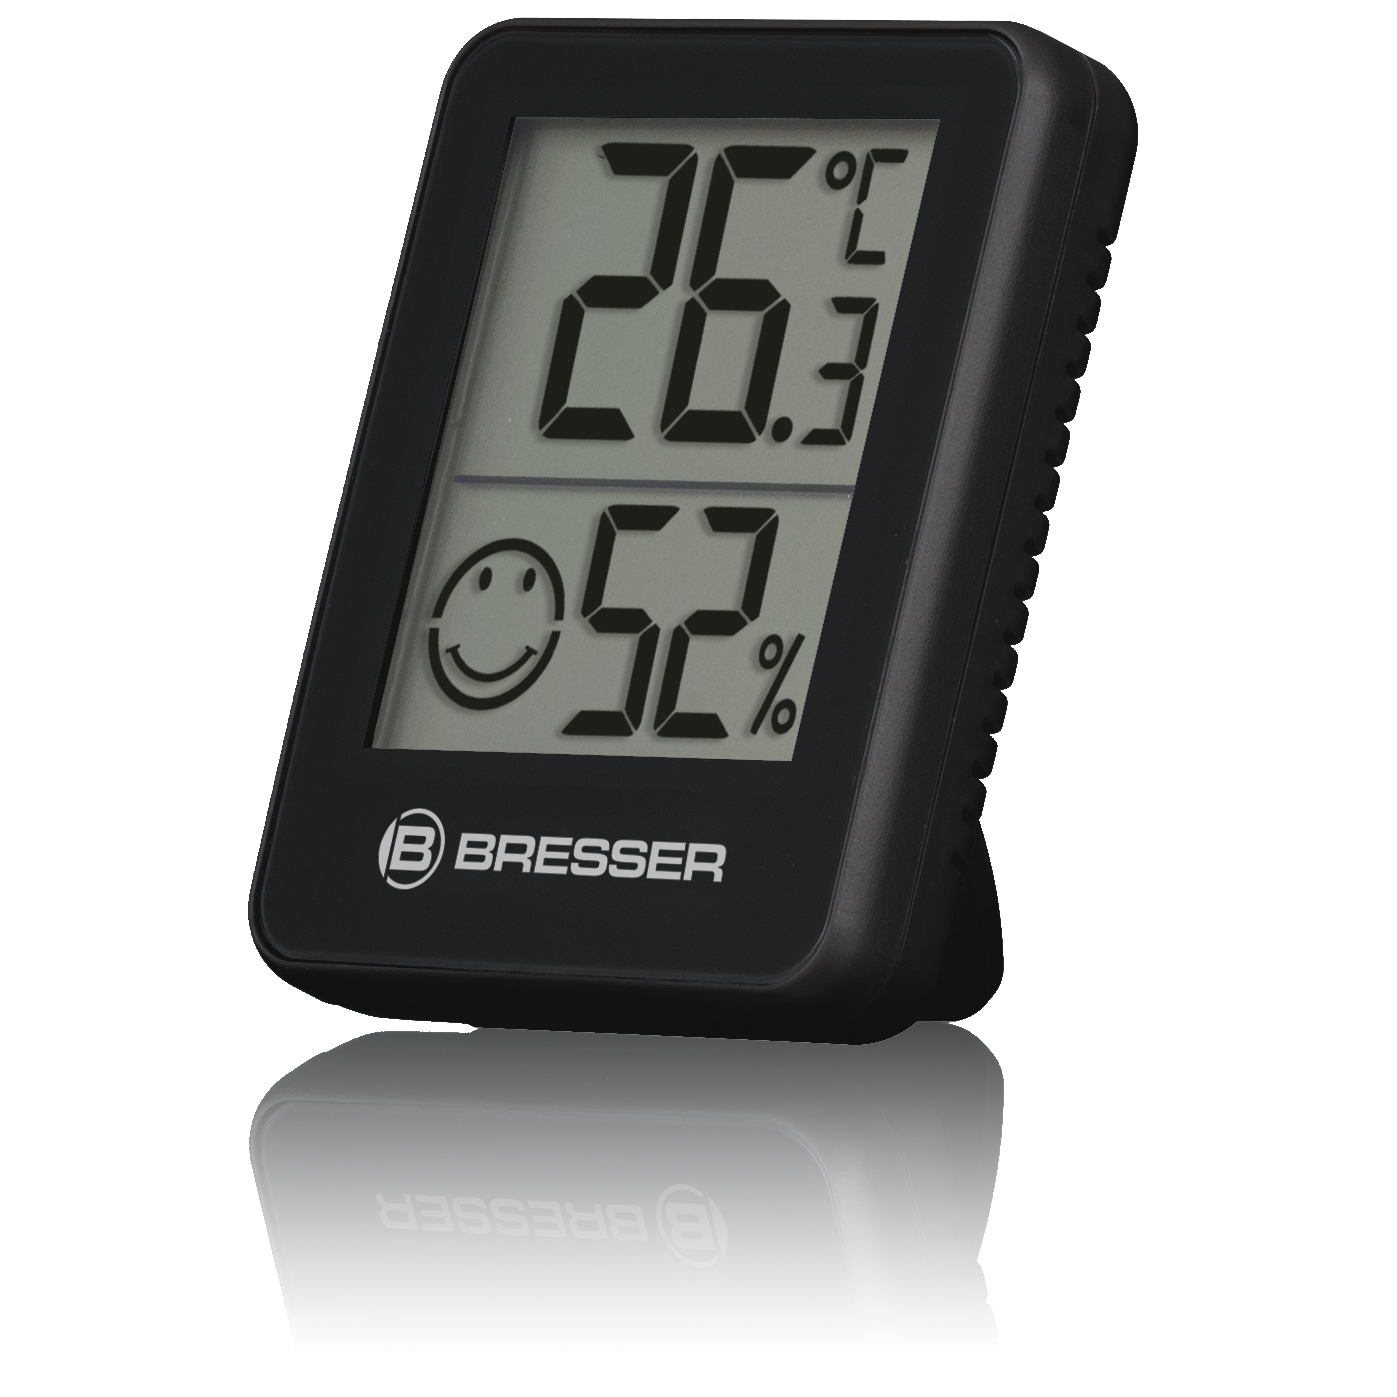 BRESSER Temeo Hygro Indikator 6er-Set Thermo-/Hygrometer Wetterstation